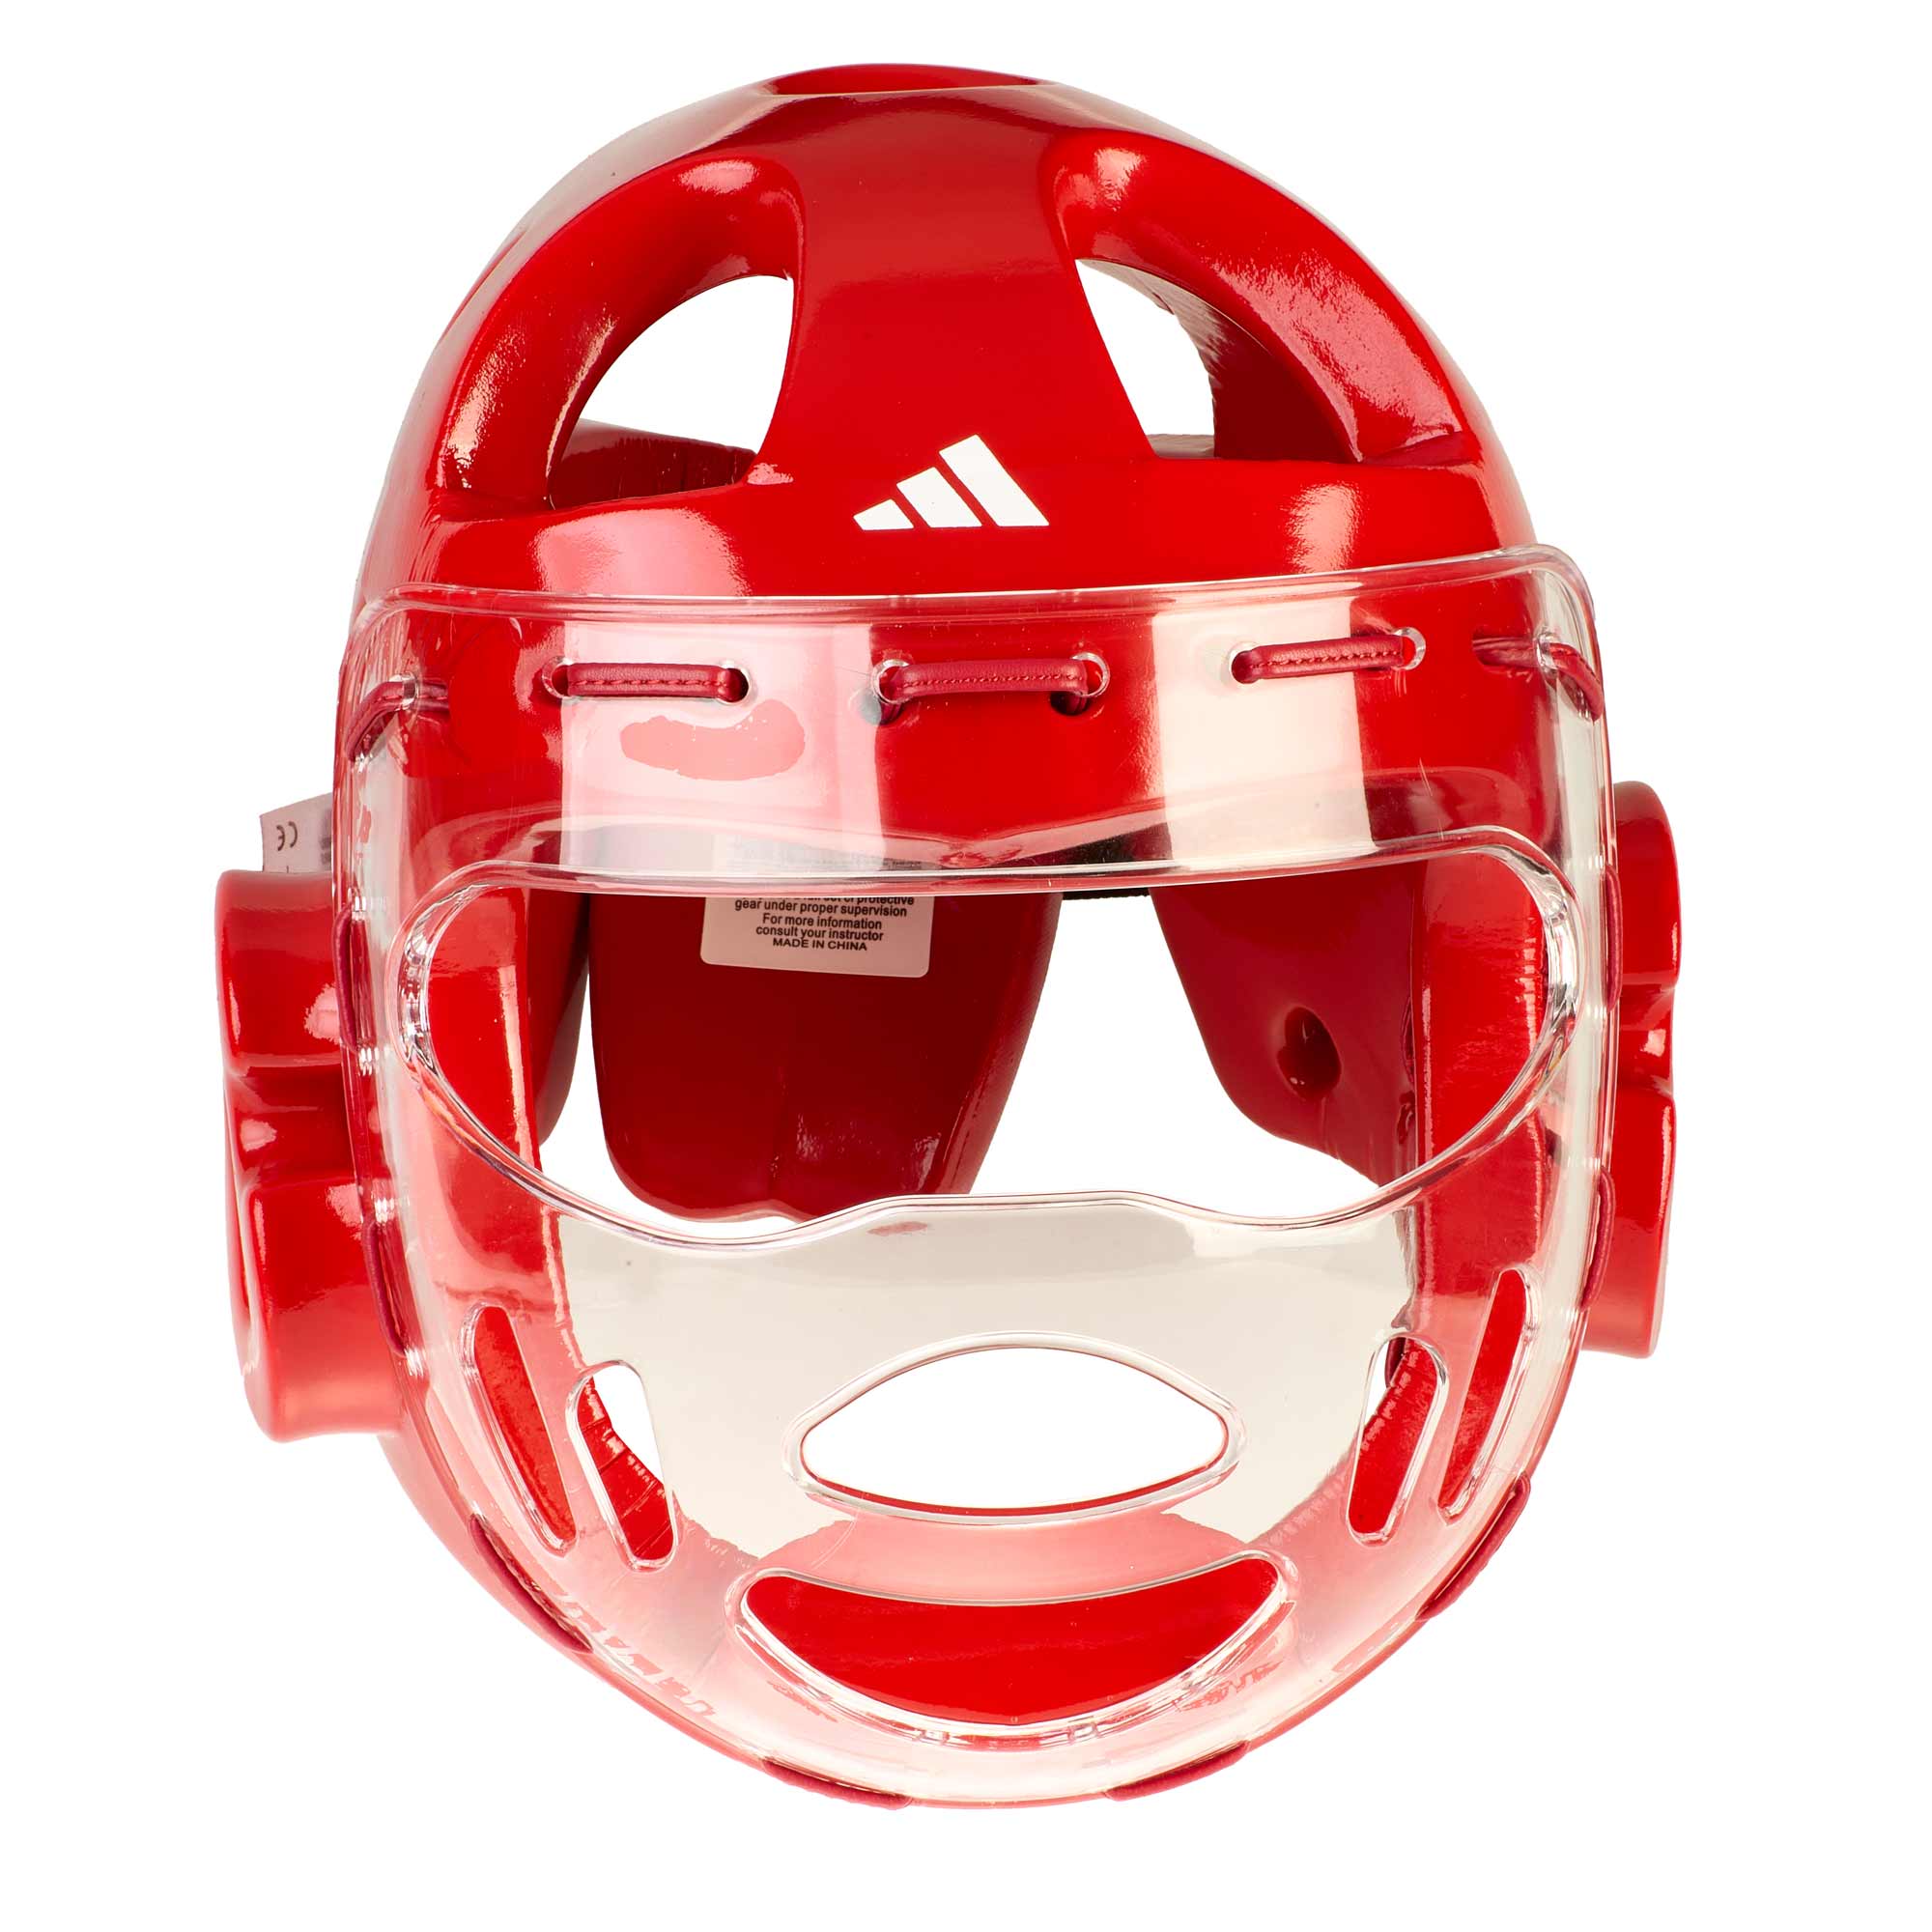 adidas Kopfschutz Dip rot mit Maske, ADITHGM01